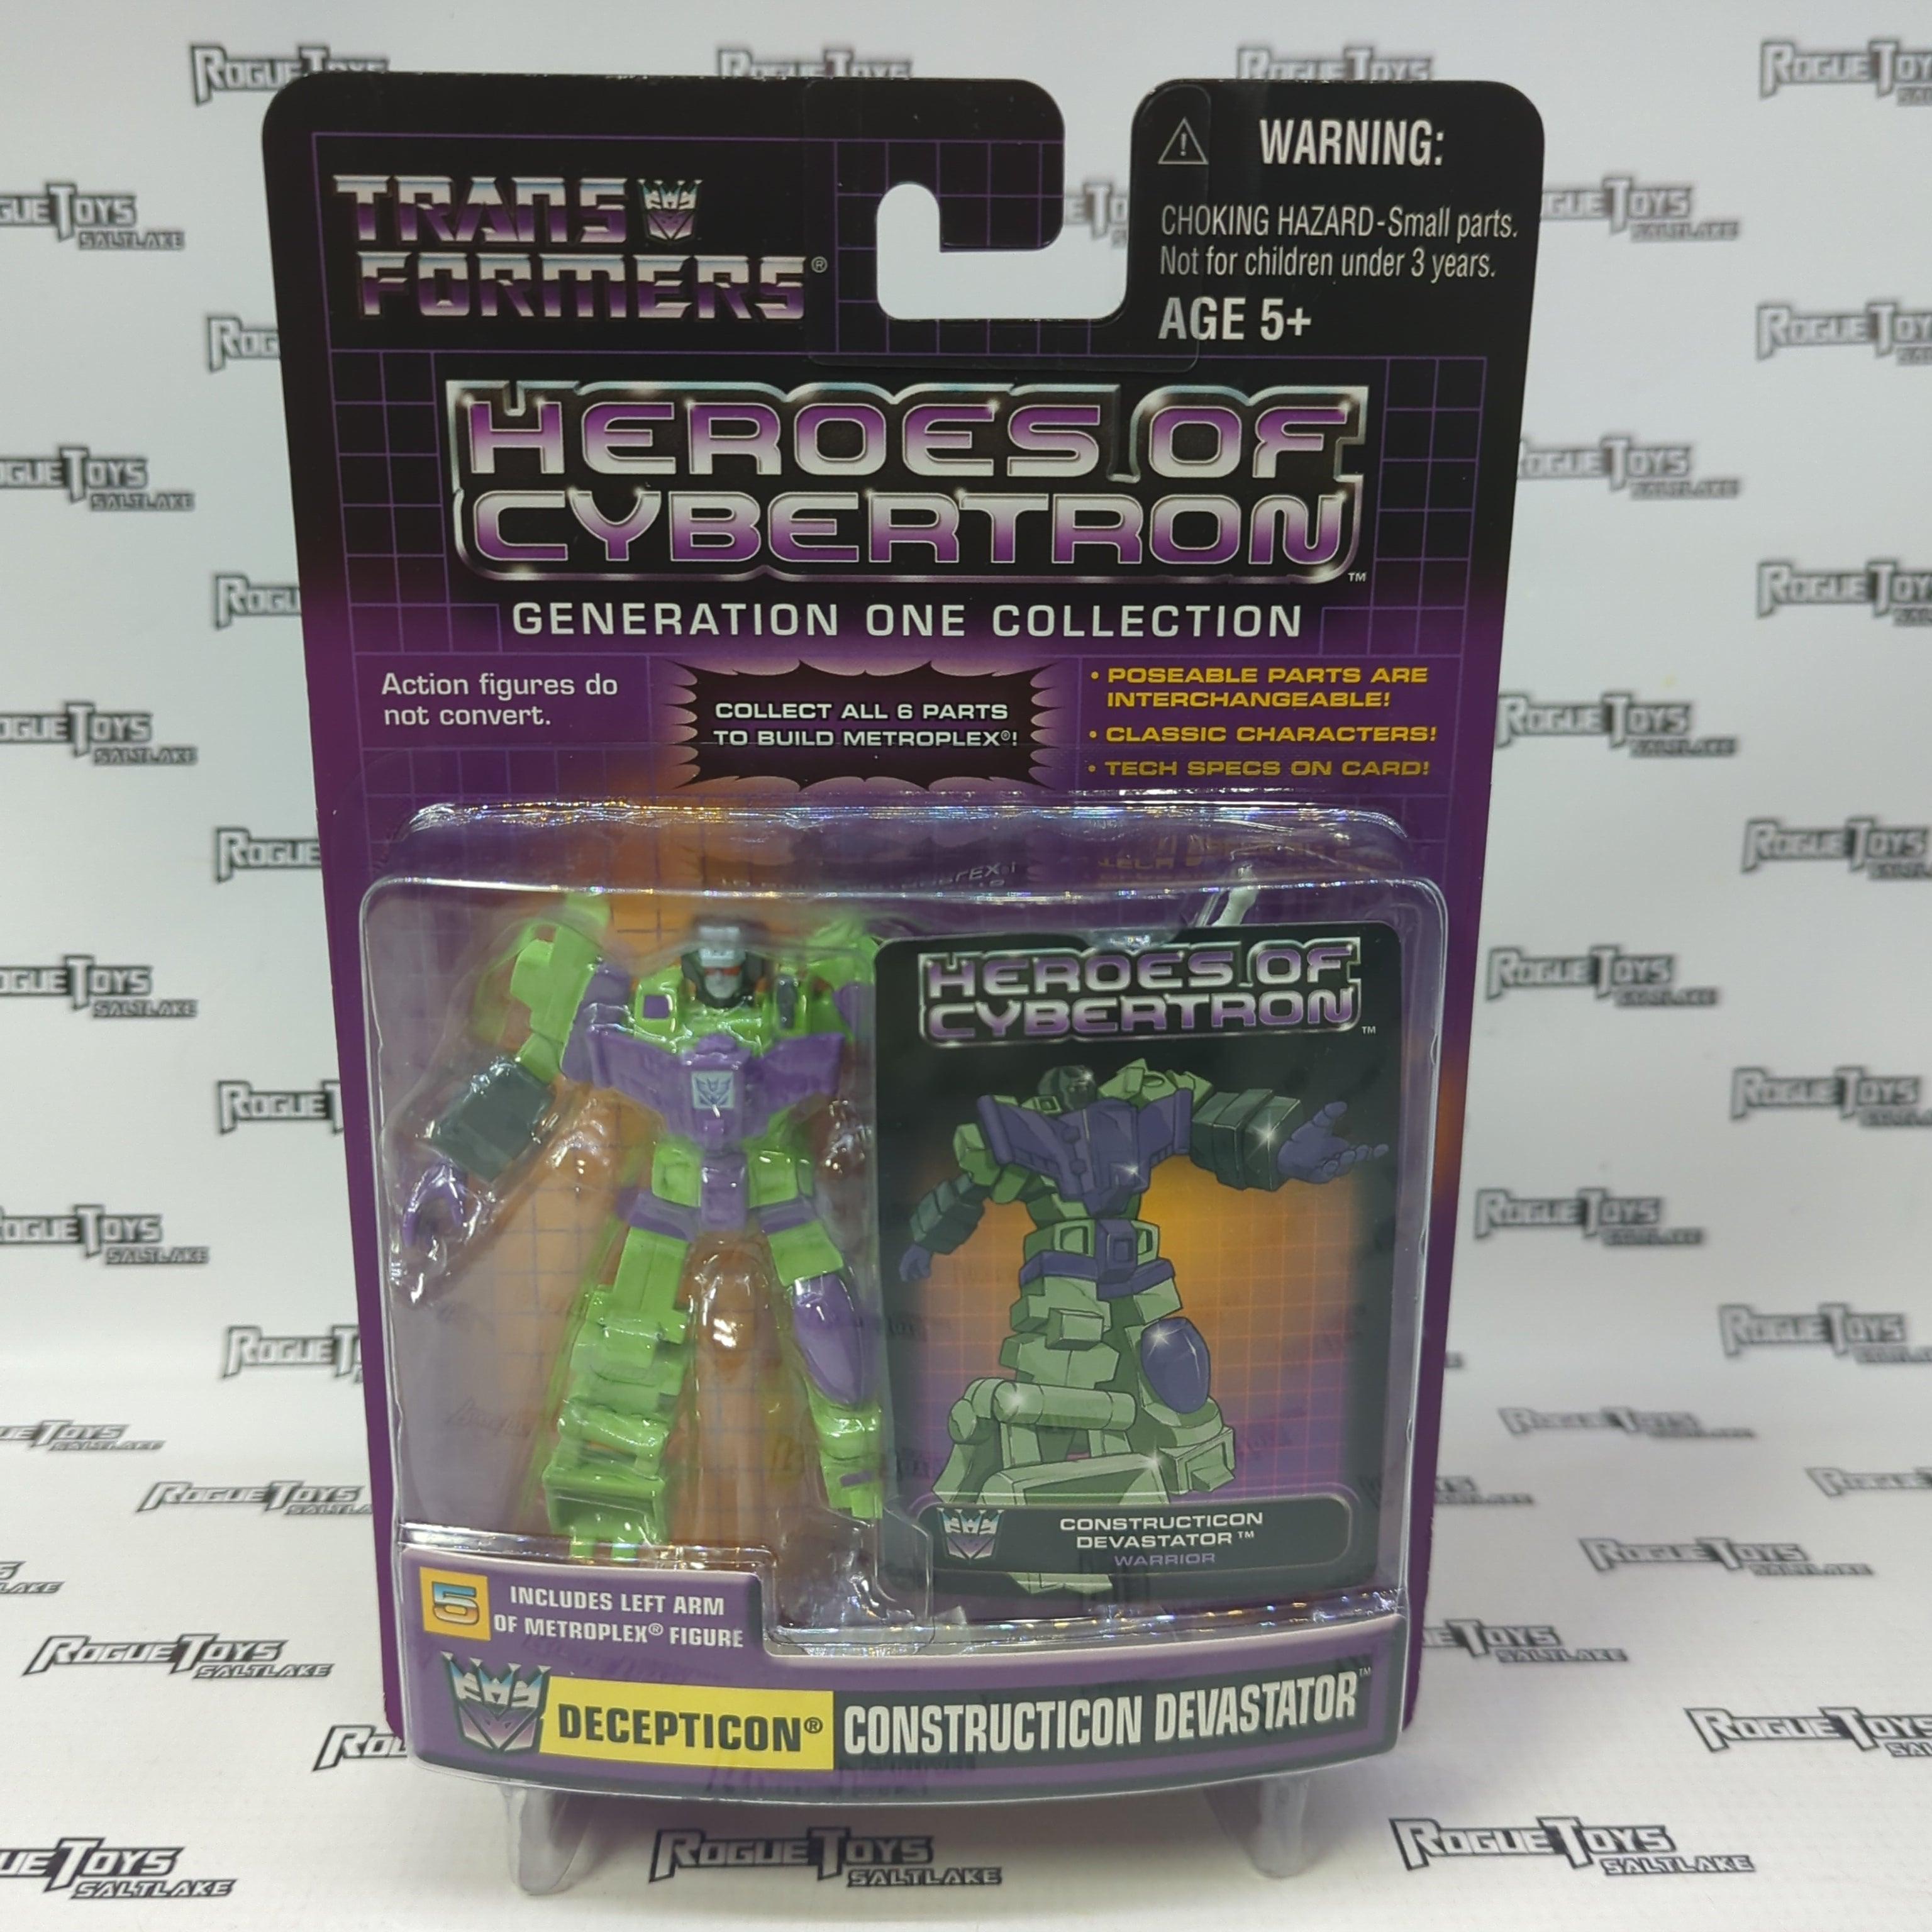 Hasbro Transformers Heroes of Cybertron Generation One Collection Decepticon Constructicon Devastator - Rogue Toys